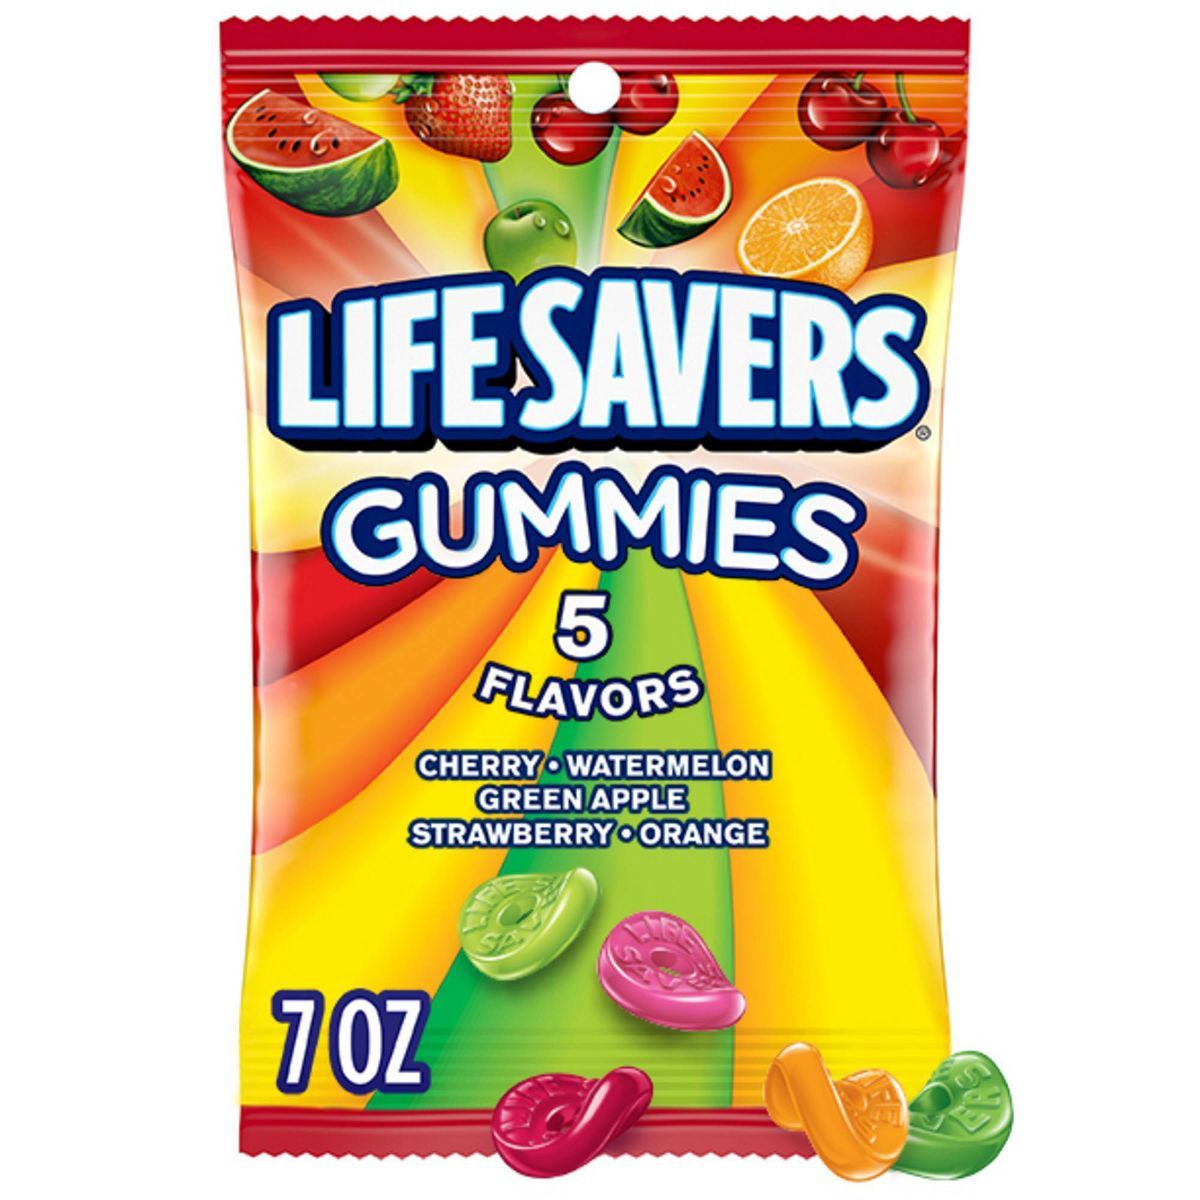 Life Savers Gummies 5 Flavors Gummy Candy - 7oz | Target